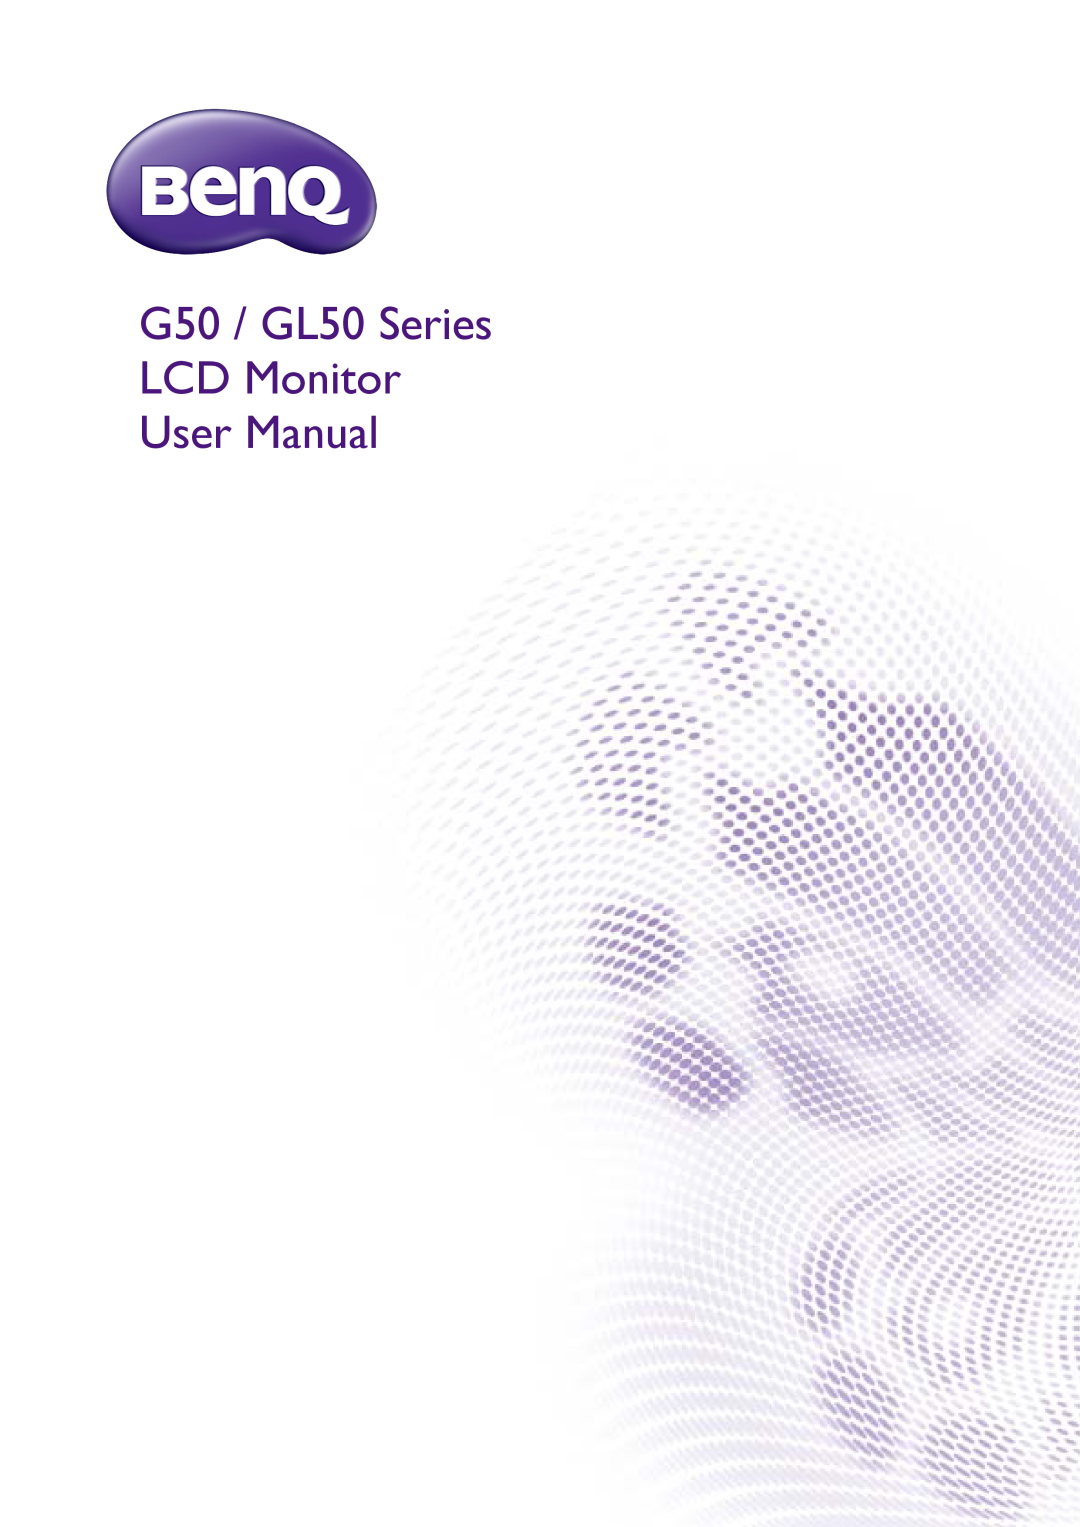 BenQ user manual G50 / GL50 Series LCD Monitor User Manual 